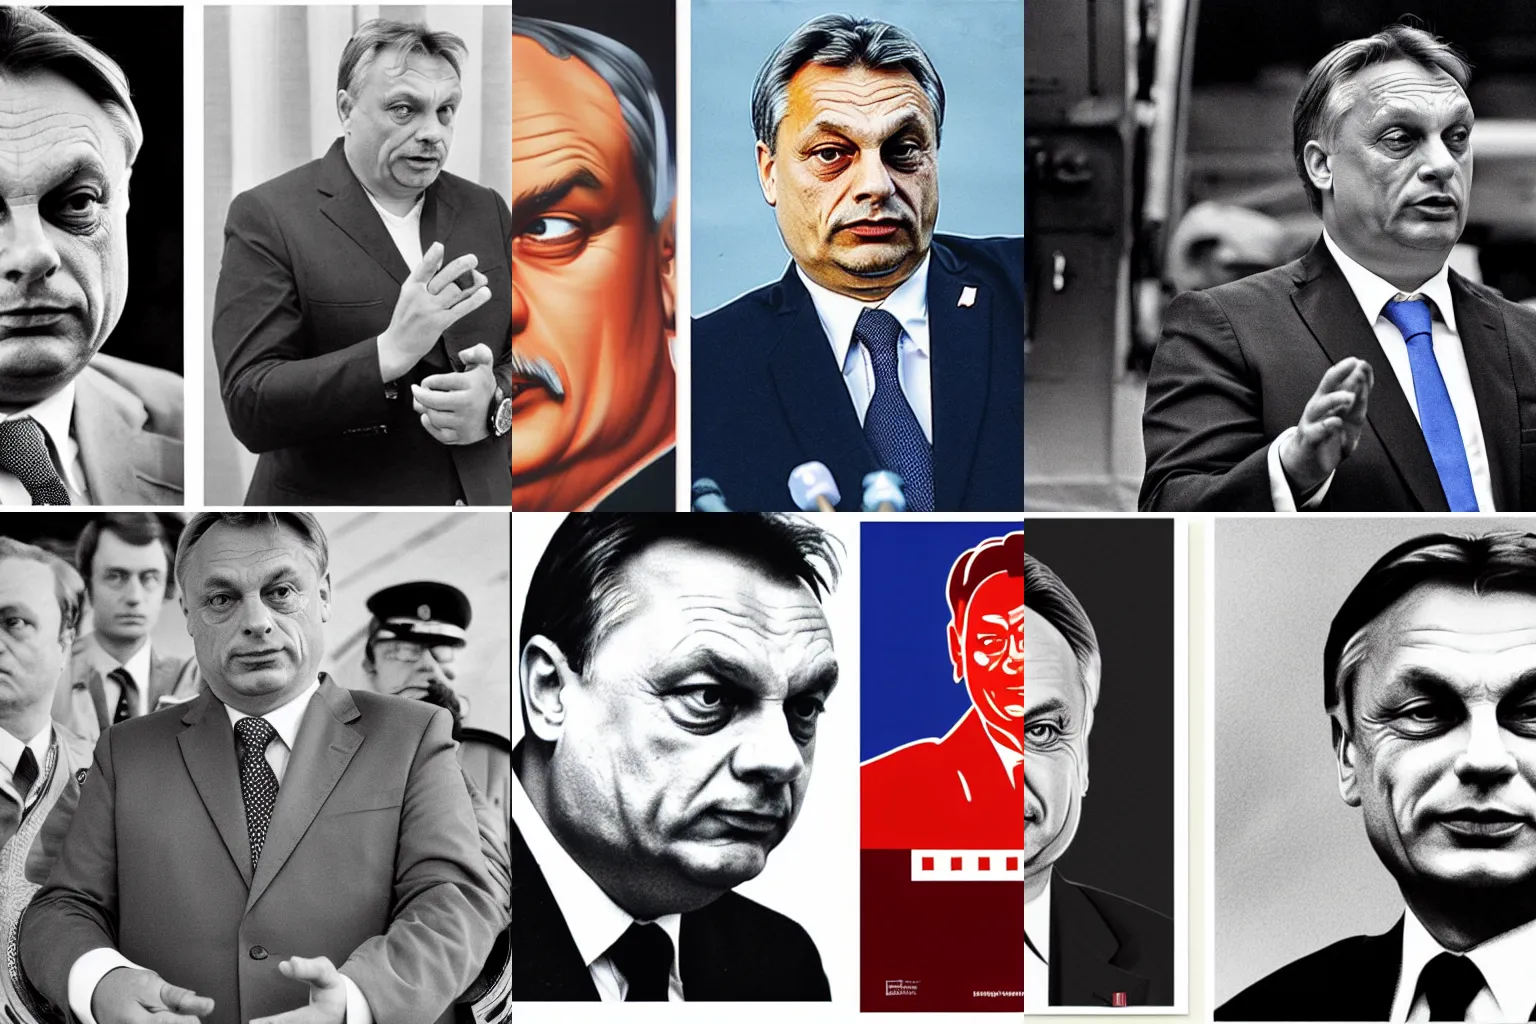 Prompt: Viktor Orban in style of 1980's soviet propaganda